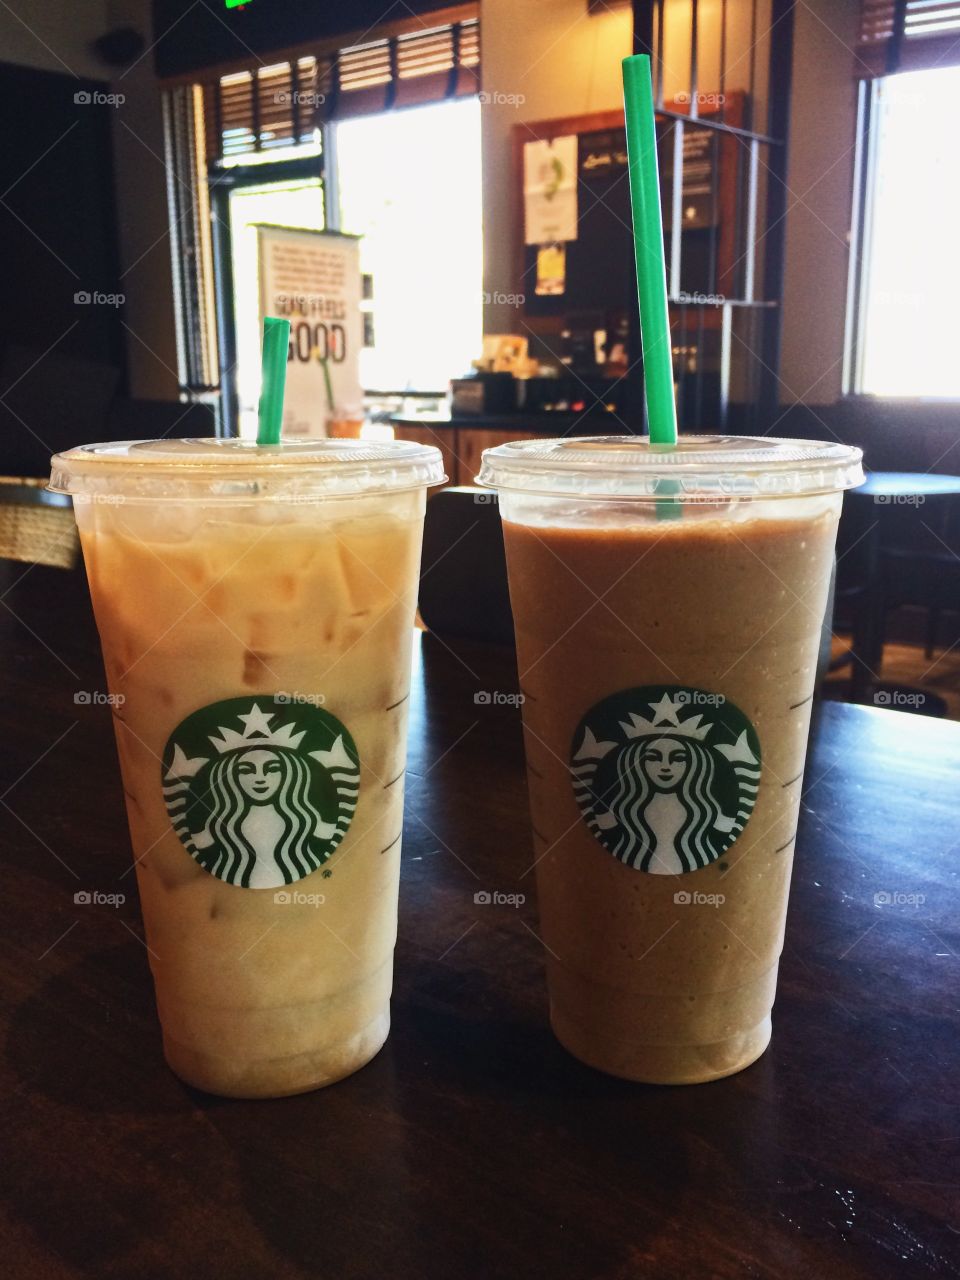 Tall straw short straw = Starbucks friendship